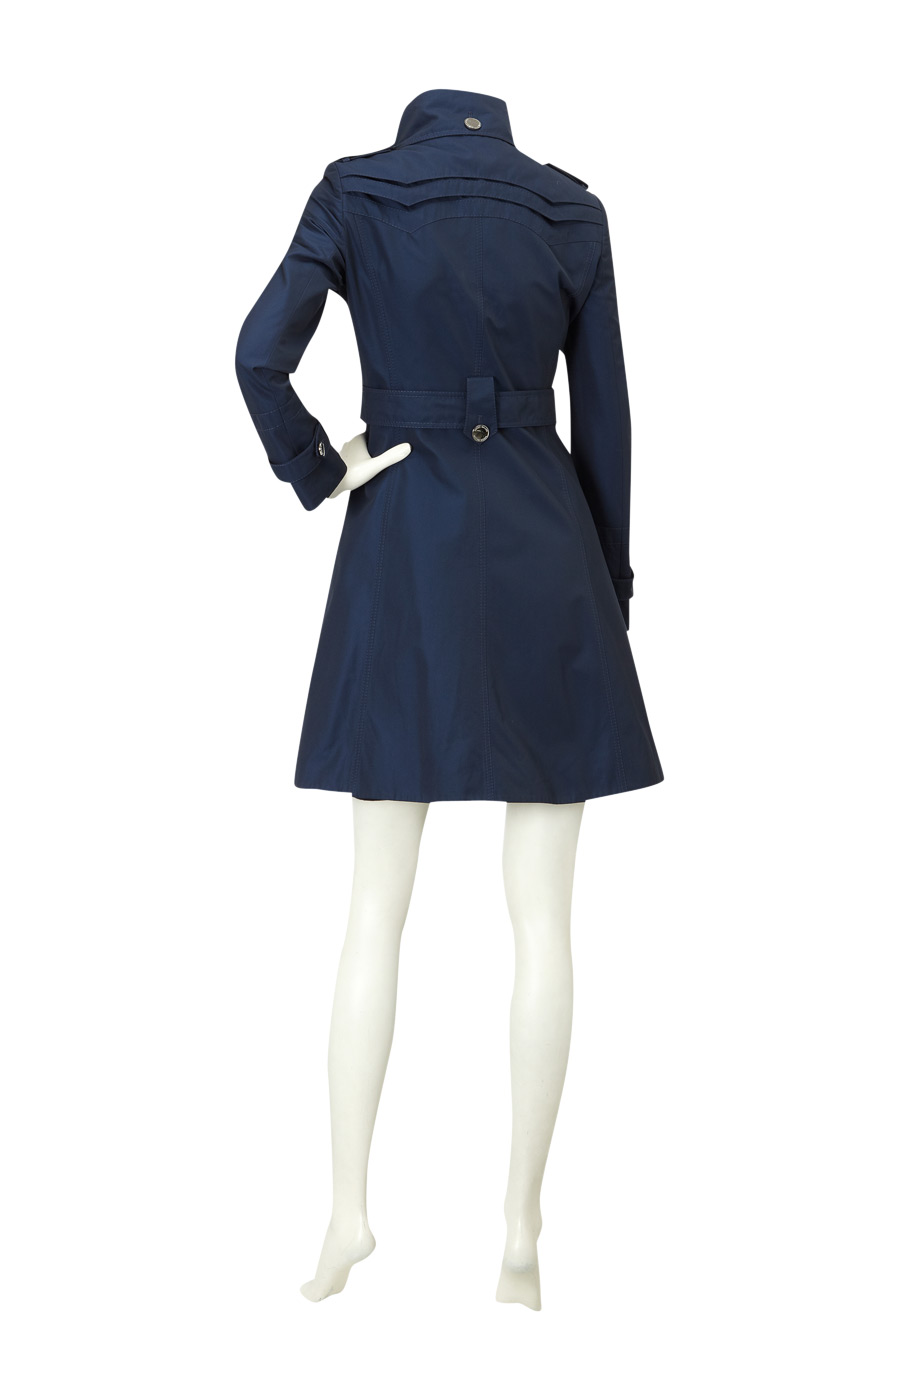 Women coat dark blue color with pocket